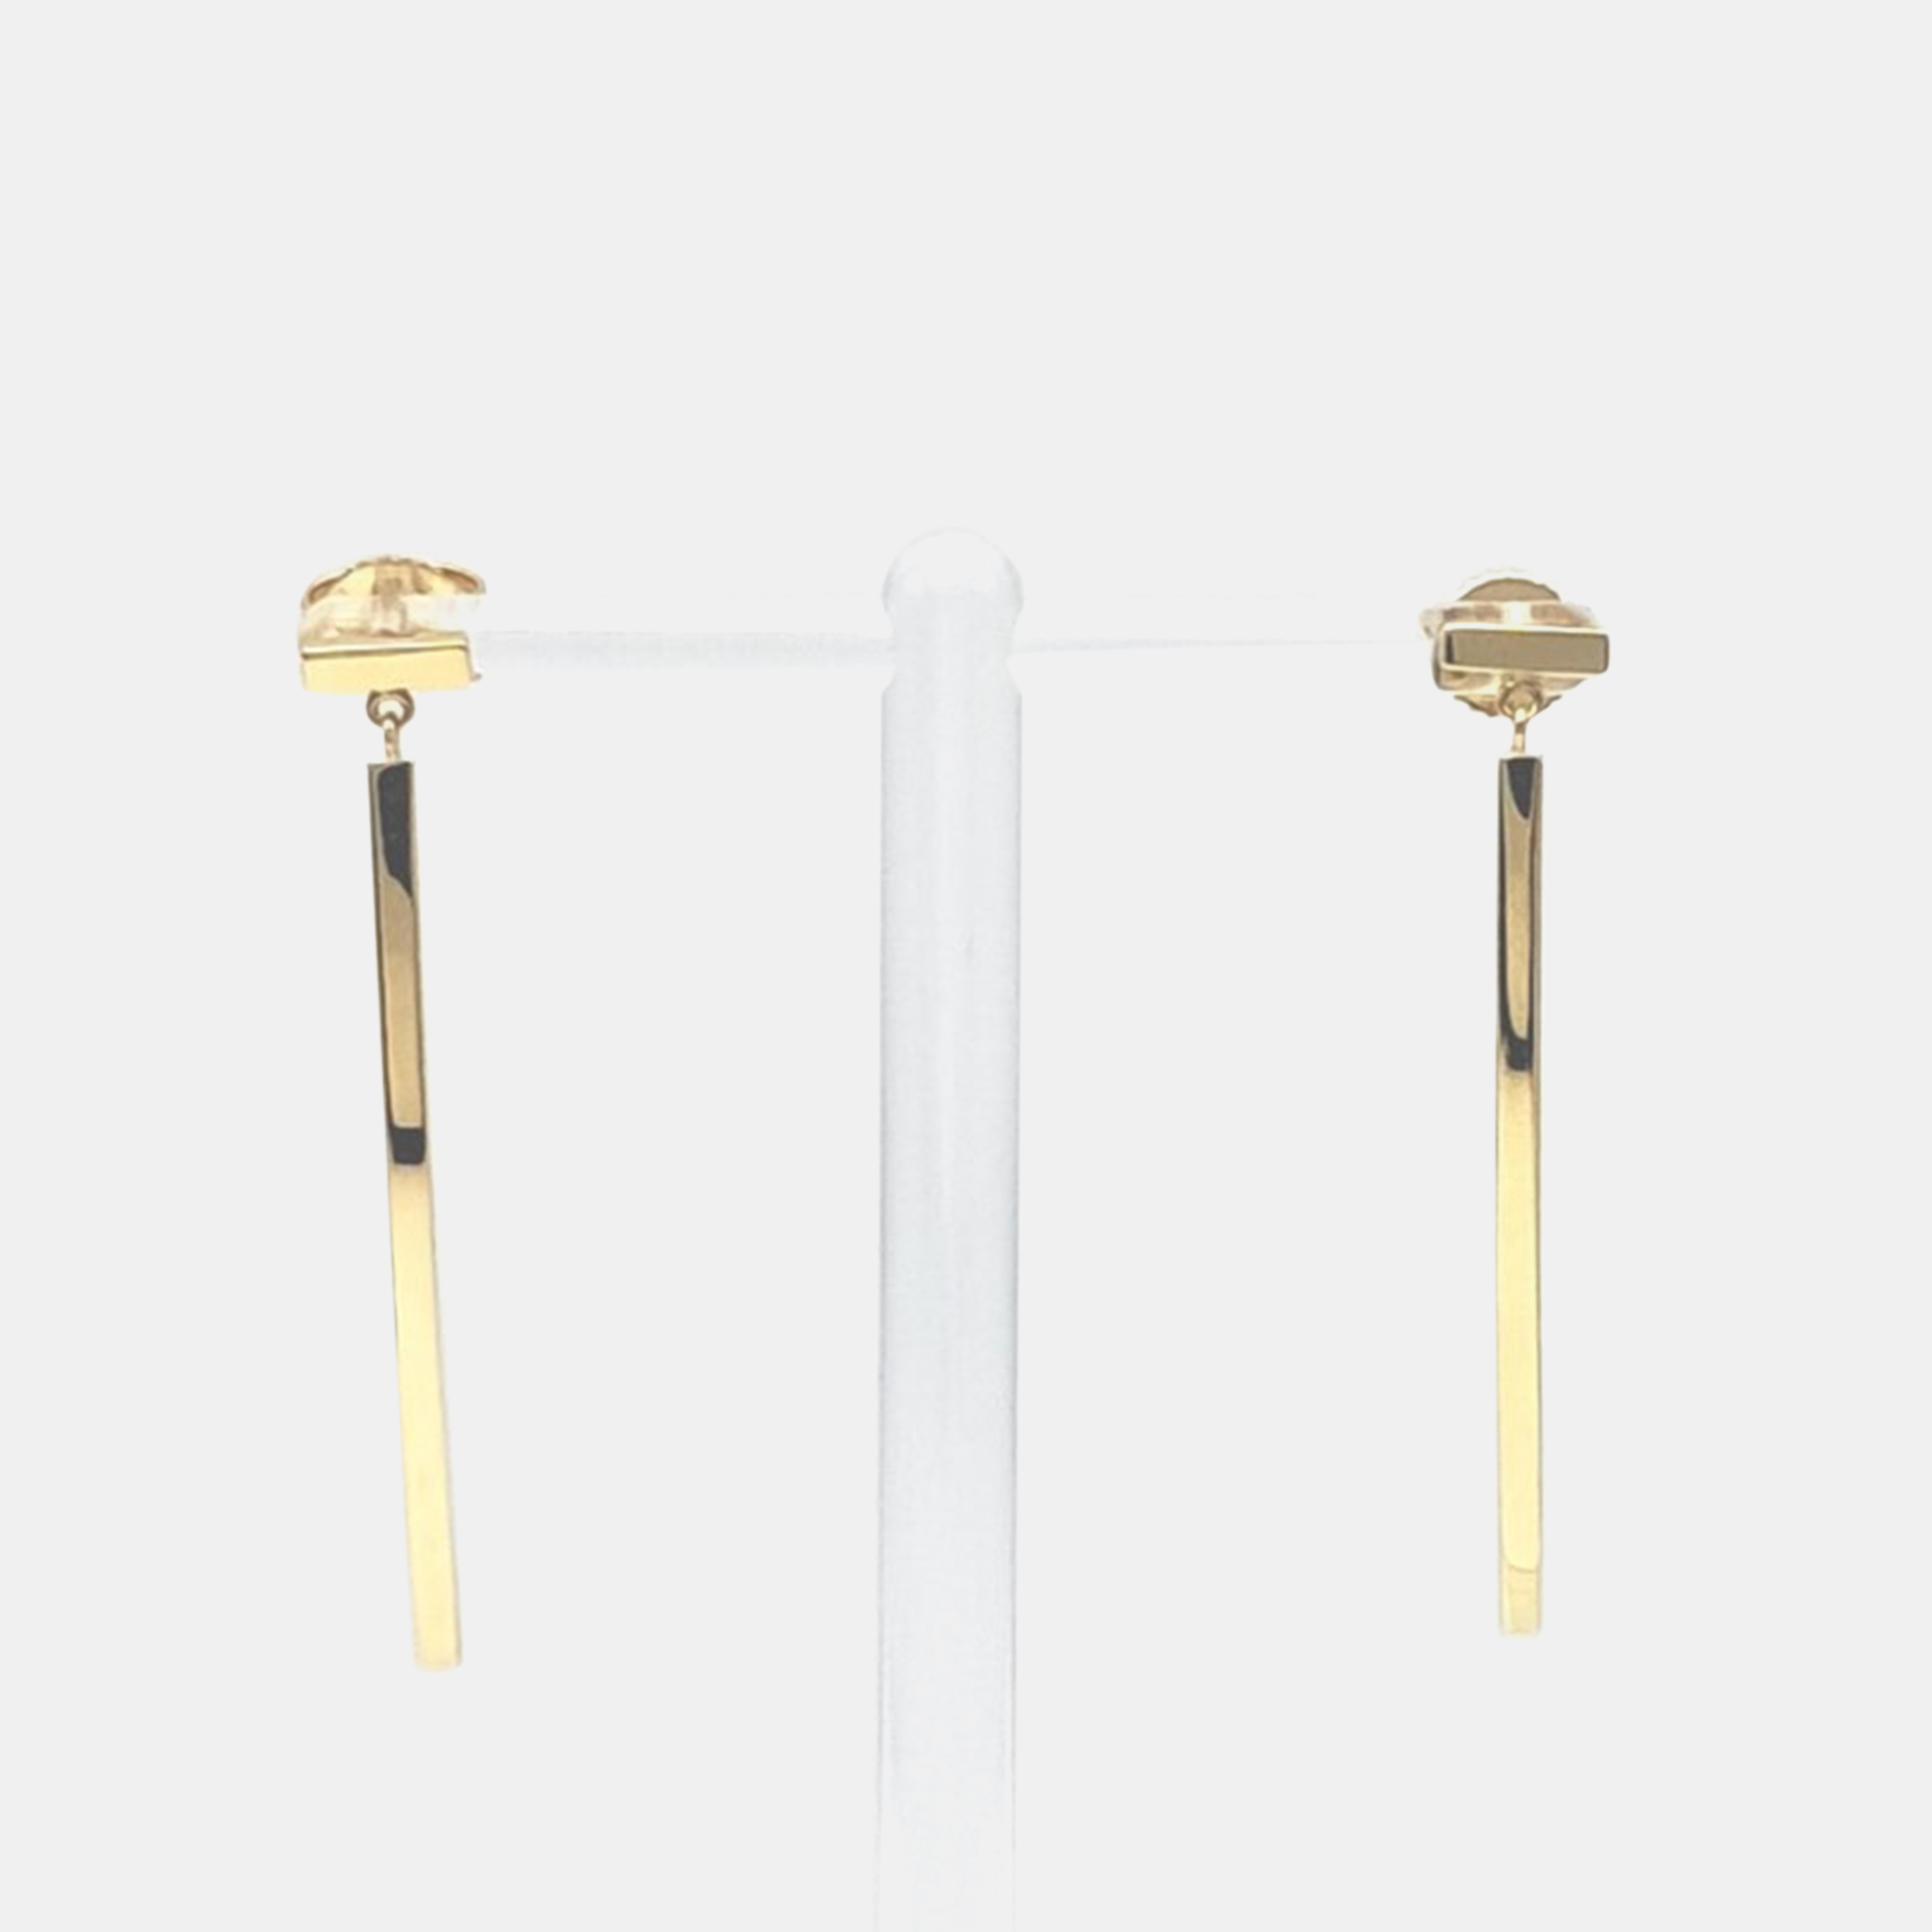 Tiffany & co. 18k yellow gold elongated wire bar earrings